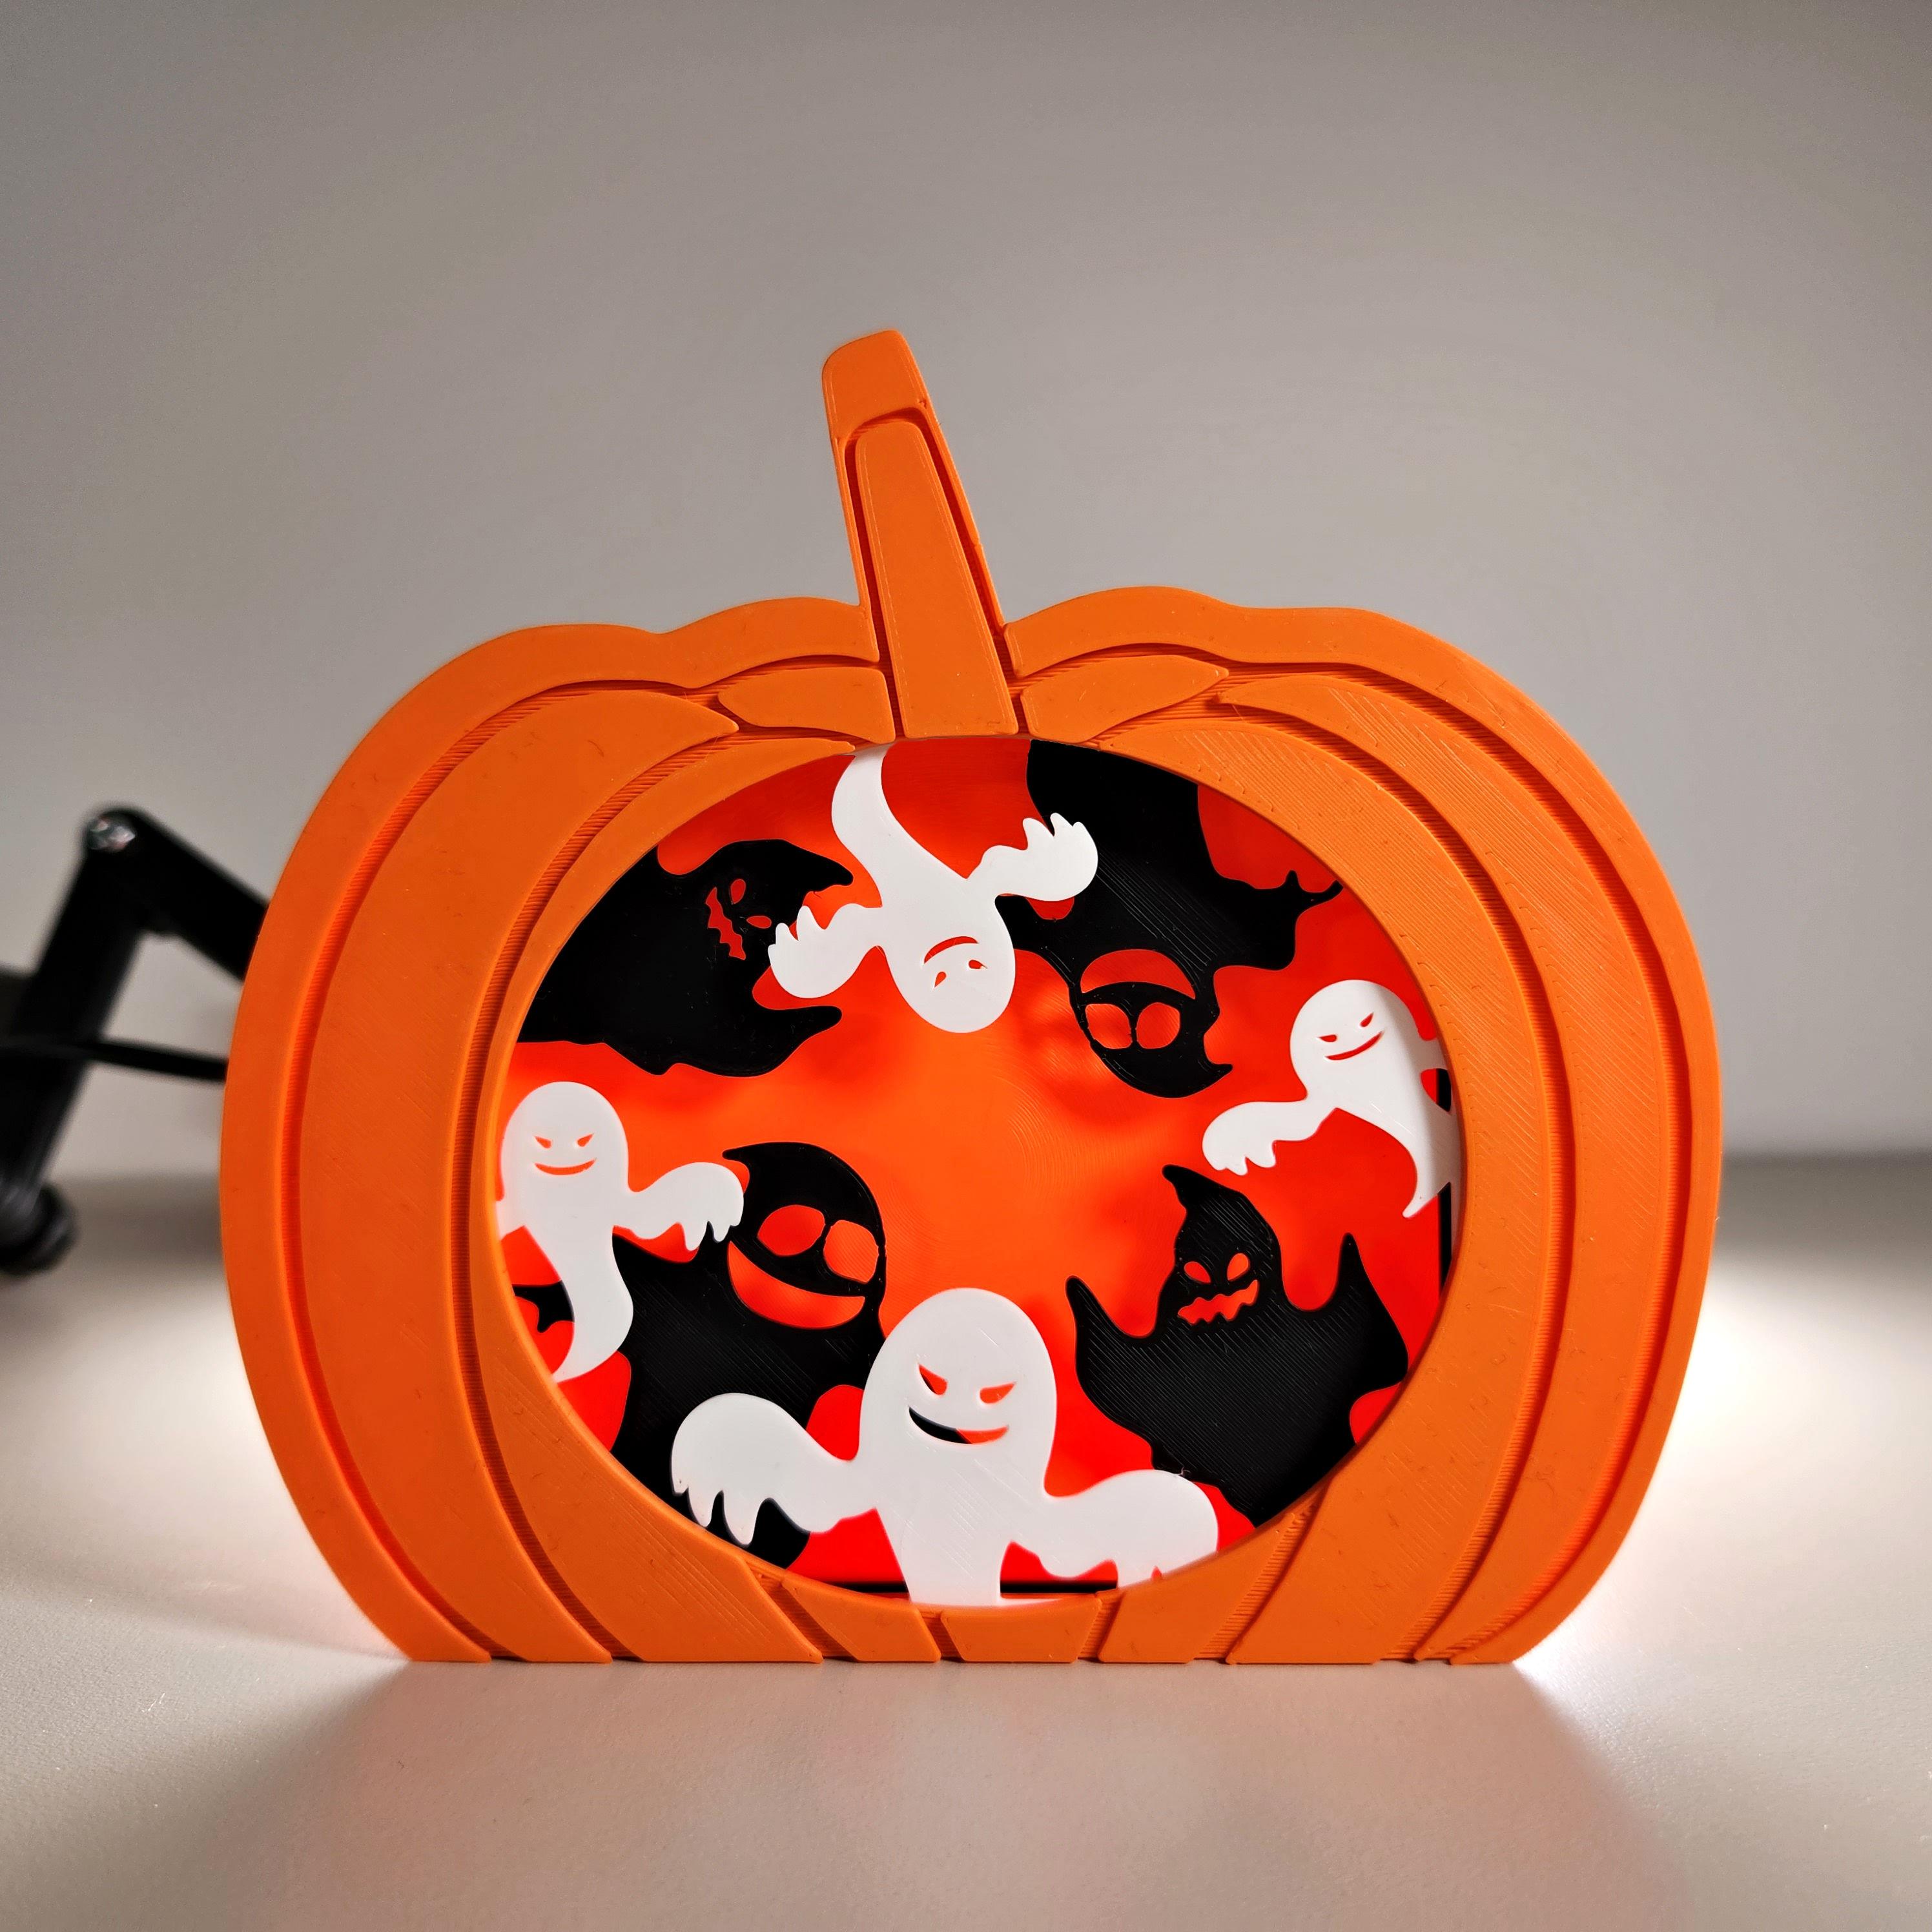 Ghosts in a Pumpkin Silhouette 3d model